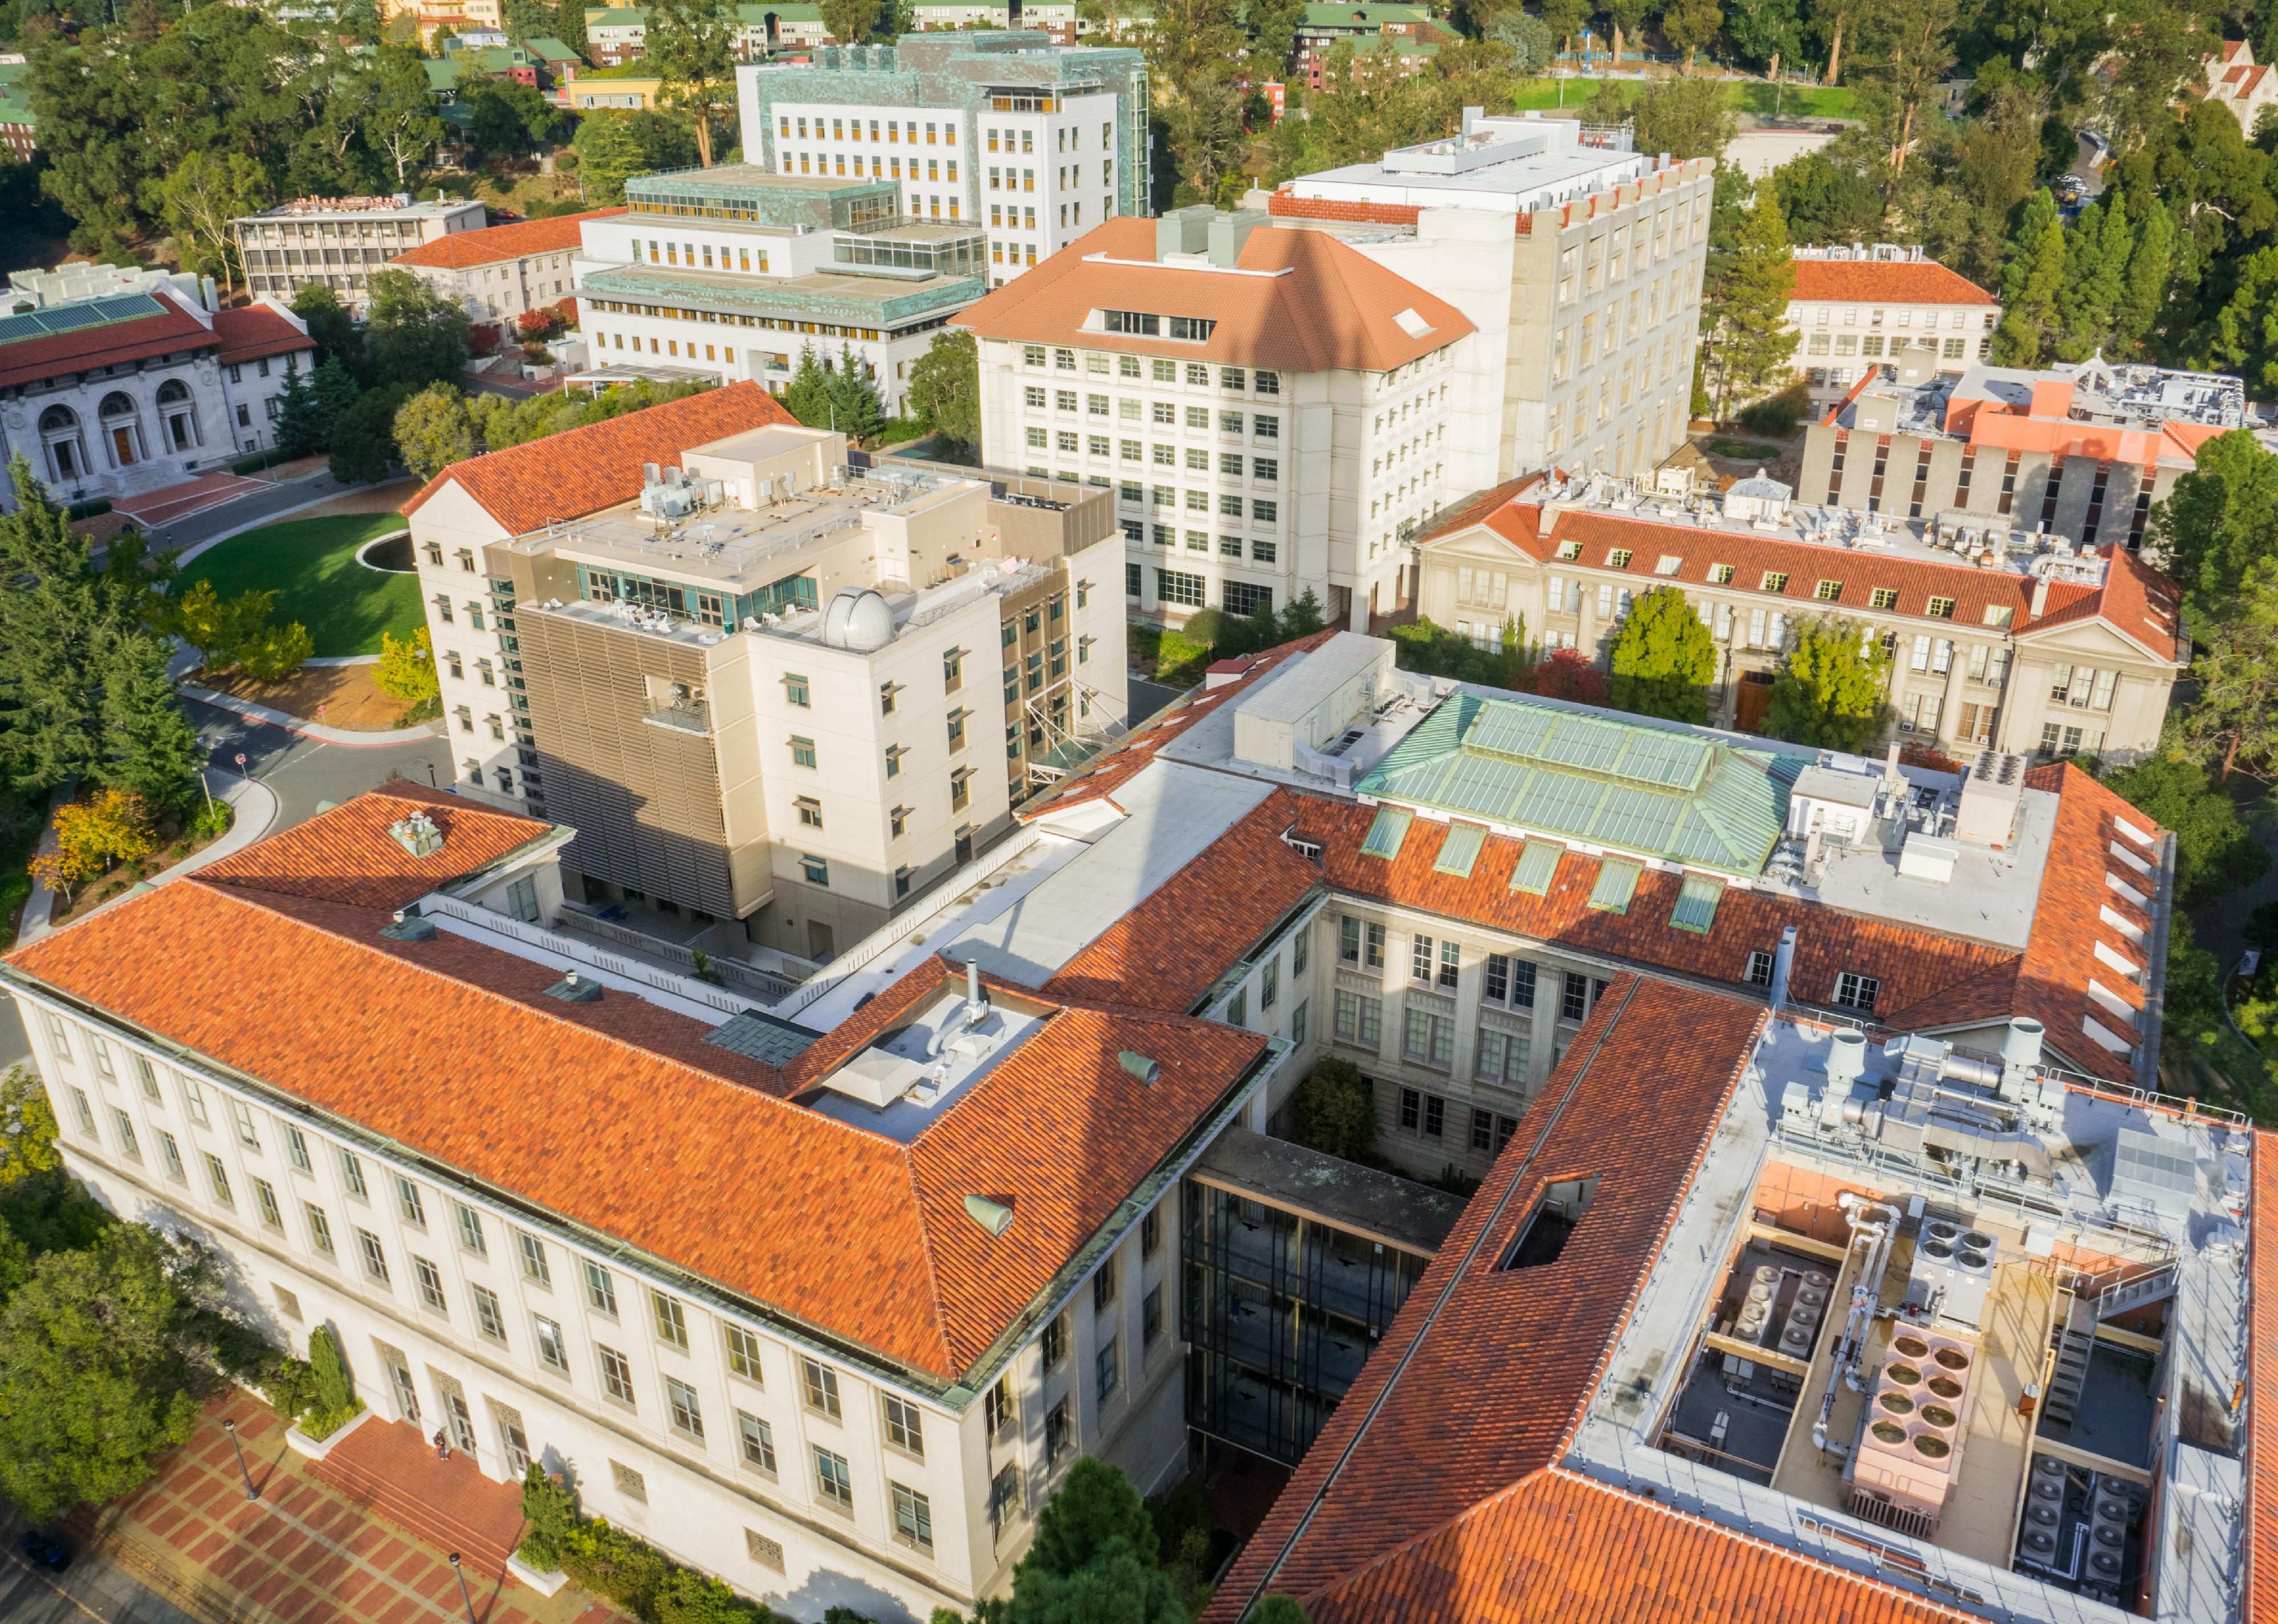 Aerial view of buildings in University of California, Berkeley campus.